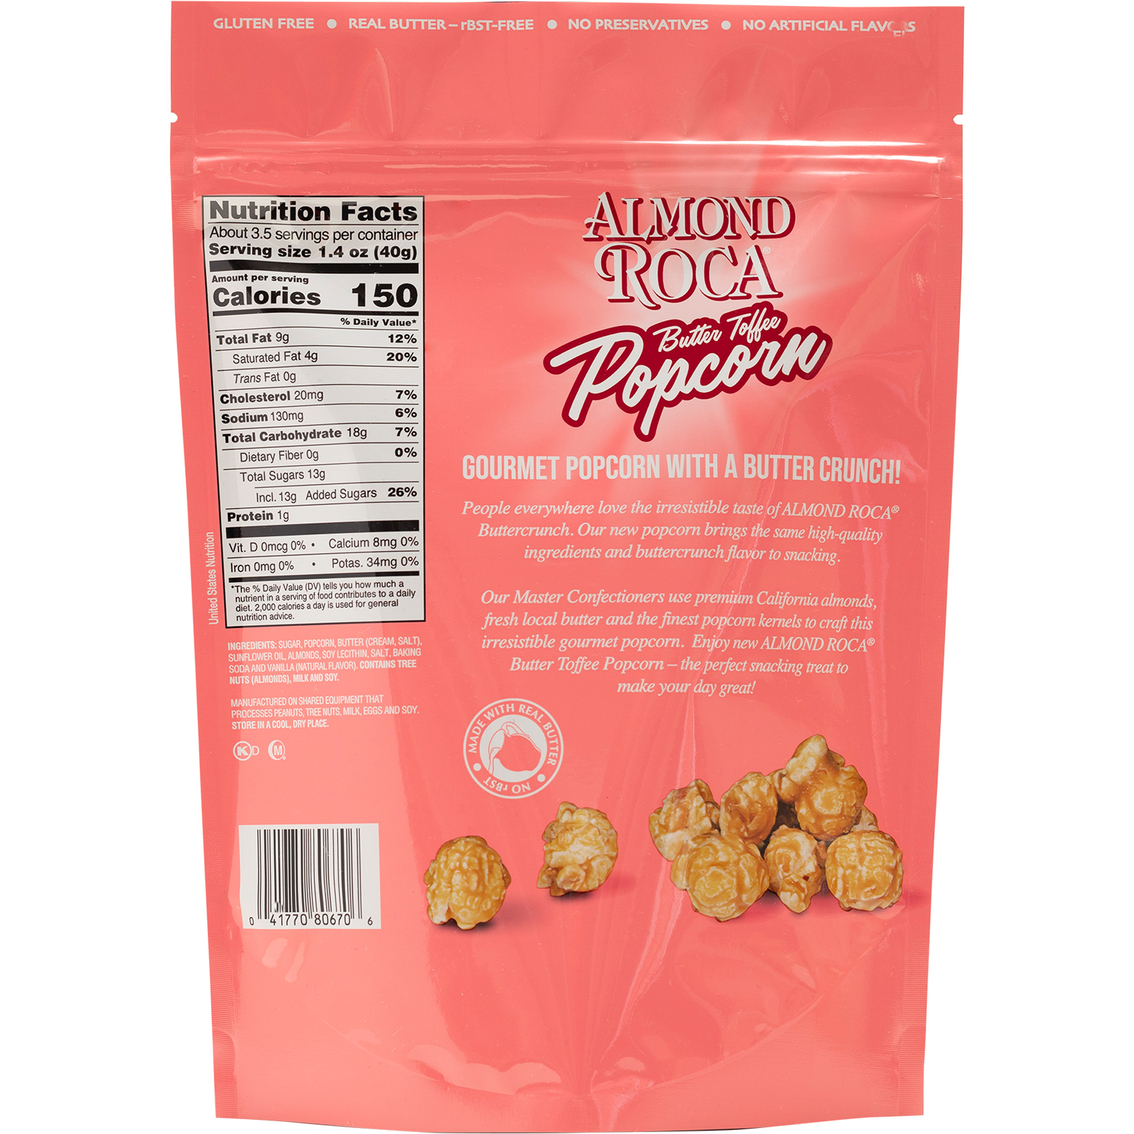 Almond Roca Gourmet Popcorn - Image 2 of 2